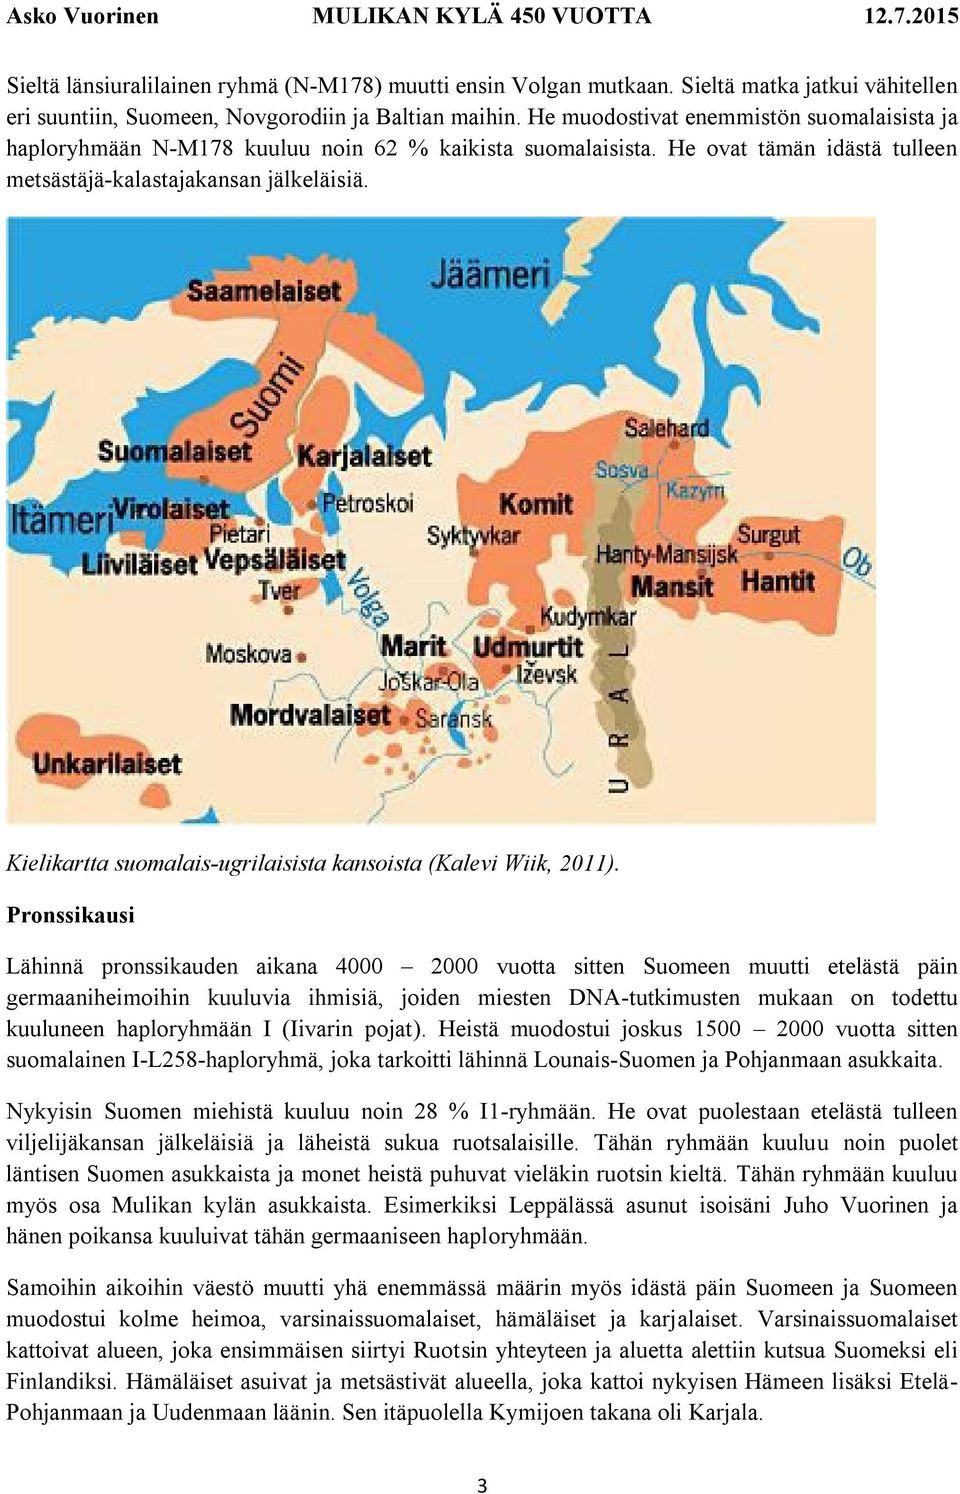 Kielikartta suomalais-ugrilaisista kansoista (Kalevi Wiik, 2011).